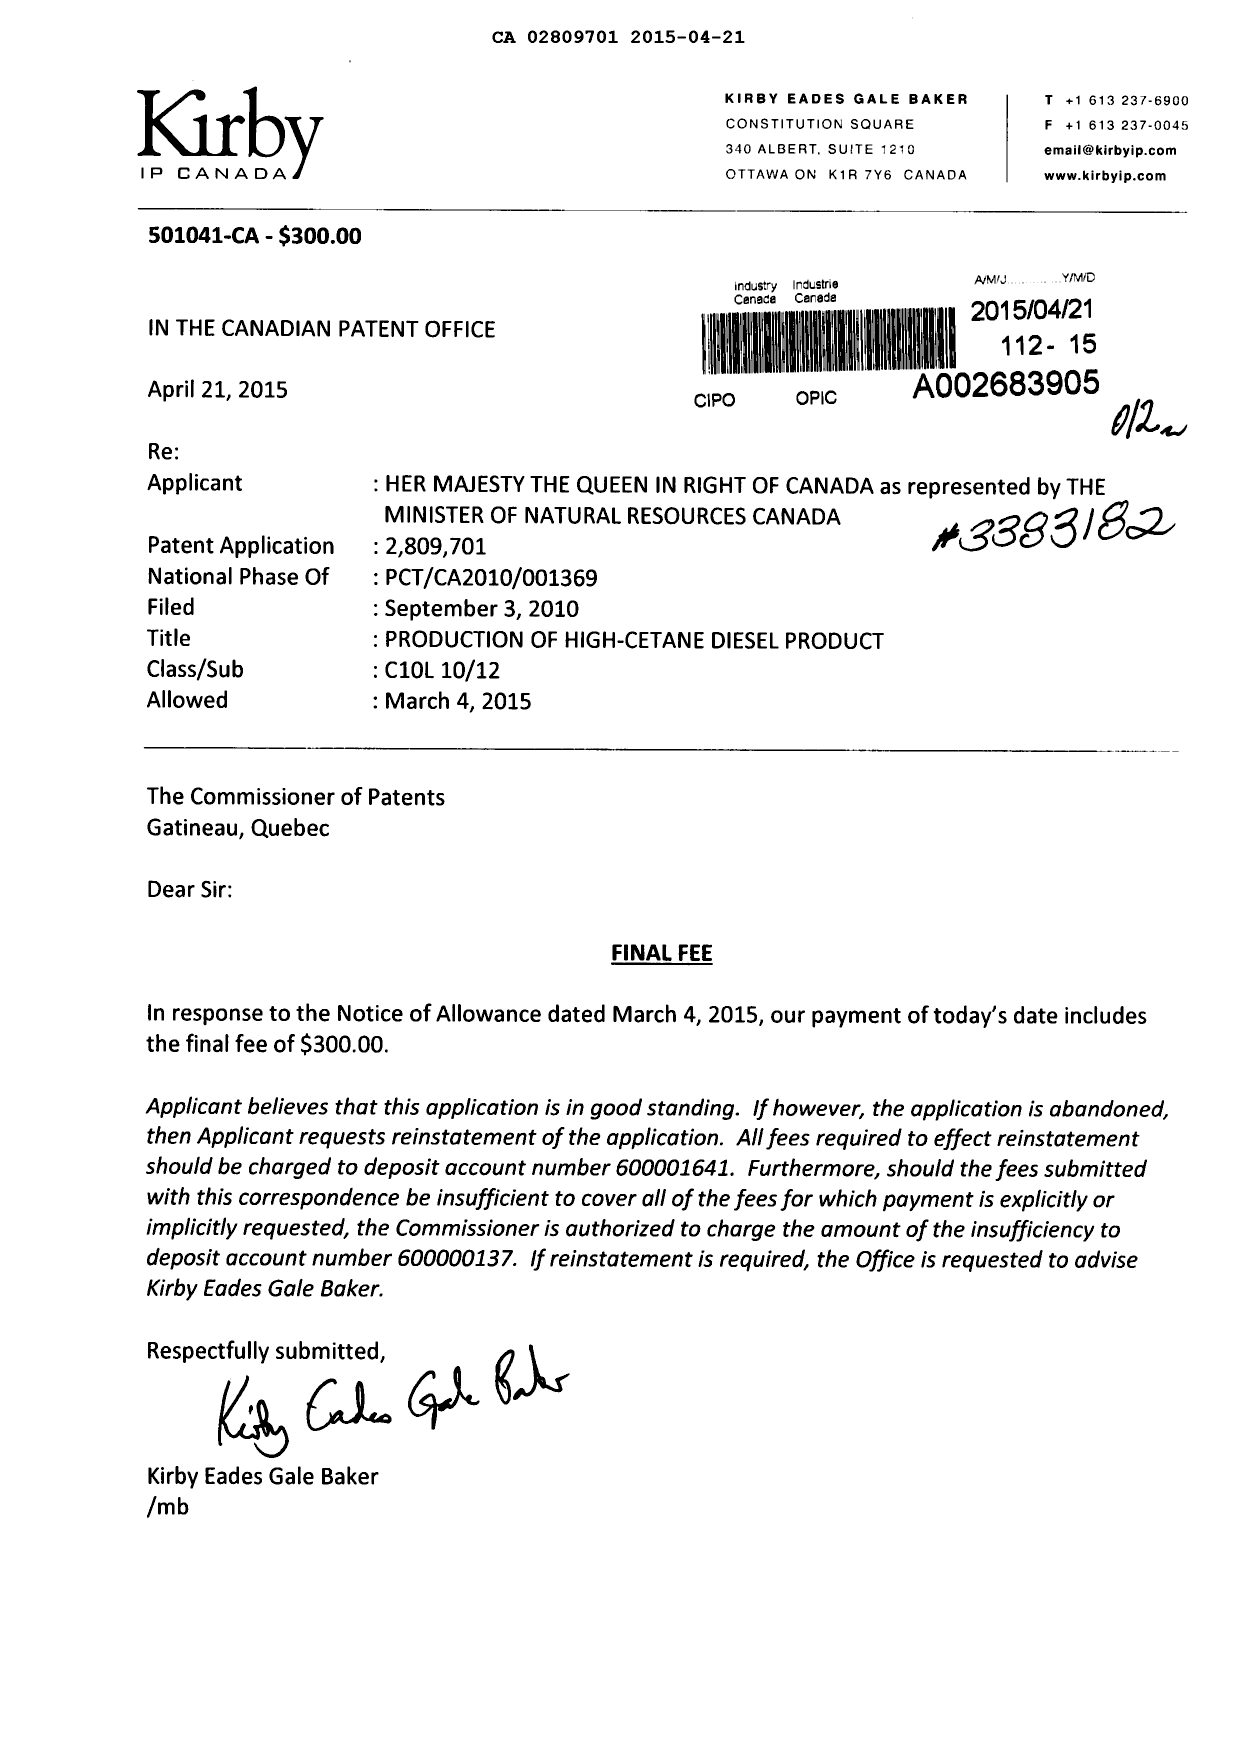 Canadian Patent Document 2809701. Correspondence 20141221. Image 1 of 1